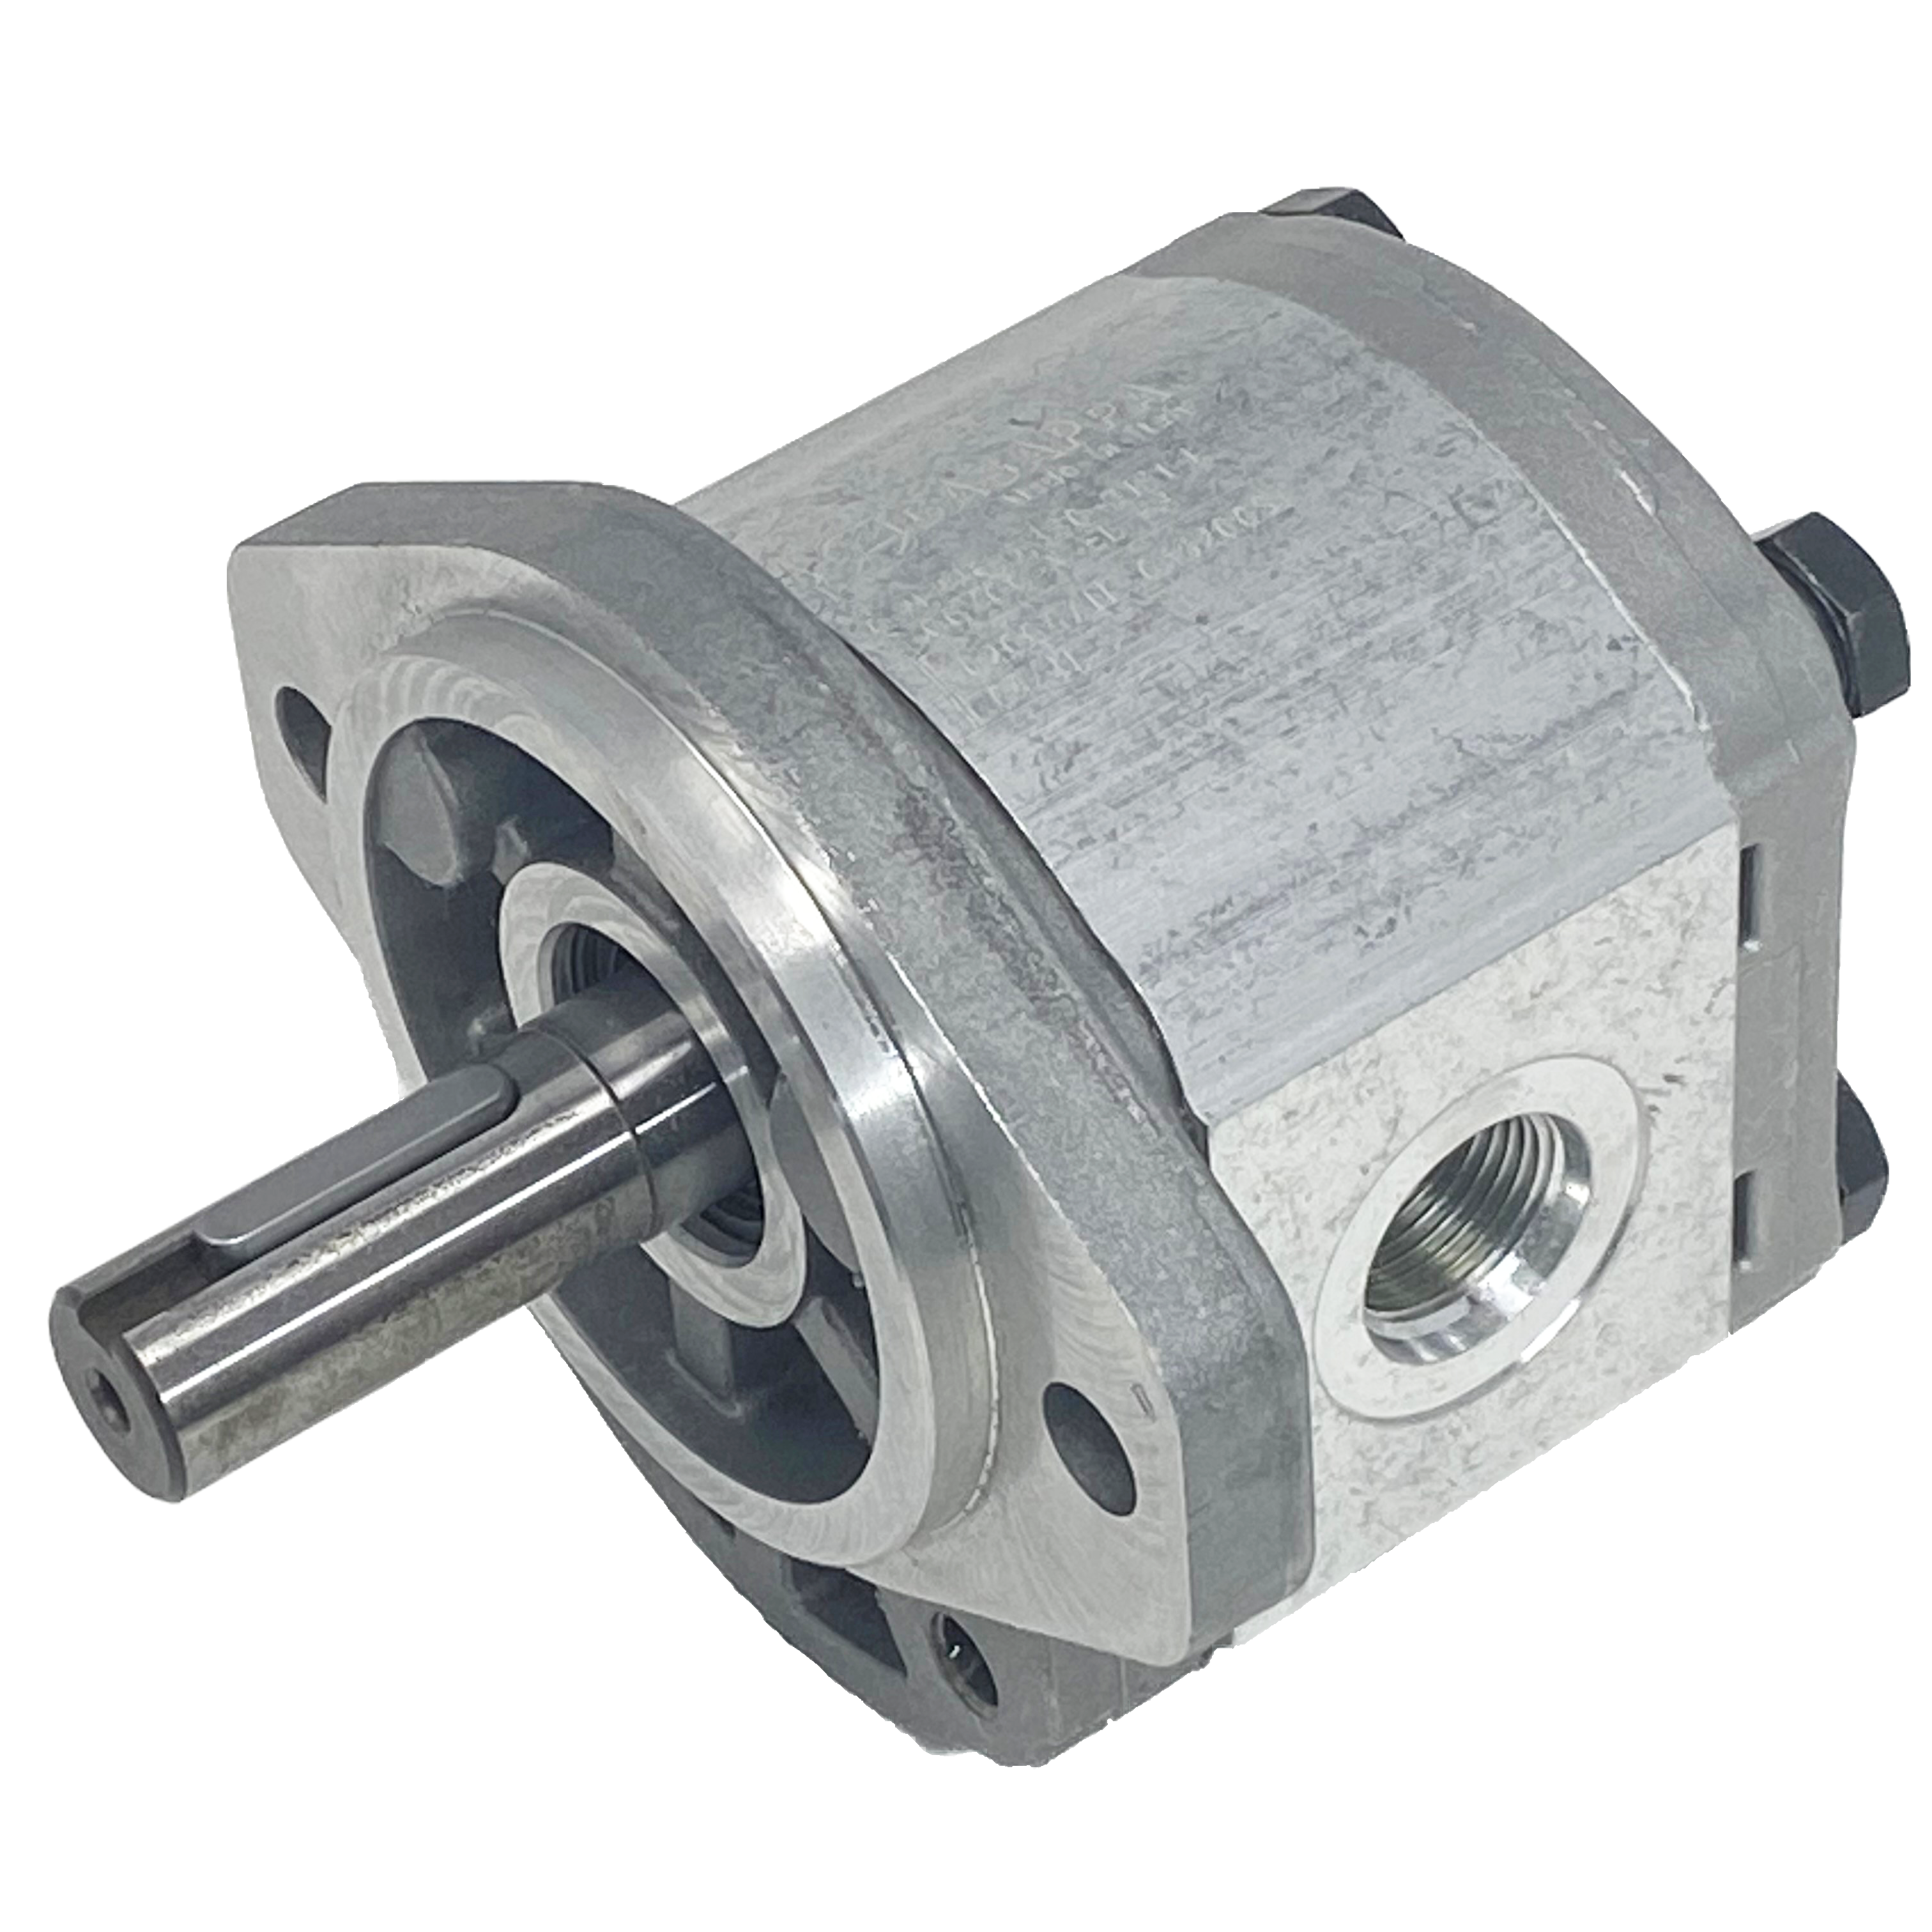 PLM20.11,2B0-49S1-LOC/OC-N-EL : Casappa Polaris Gear Motor, 11.23cc, 3625psi Rated, 3500RPM, Reversible Interior Drain, 3/4" Bore x 3/16" Key Shaft, SAE A 2-Bolt Flange, 0.625 (5/8") #10 SAE Inlet, 0.625 (5/8") #10 SAE Outlet, Aluminum Body & Flange